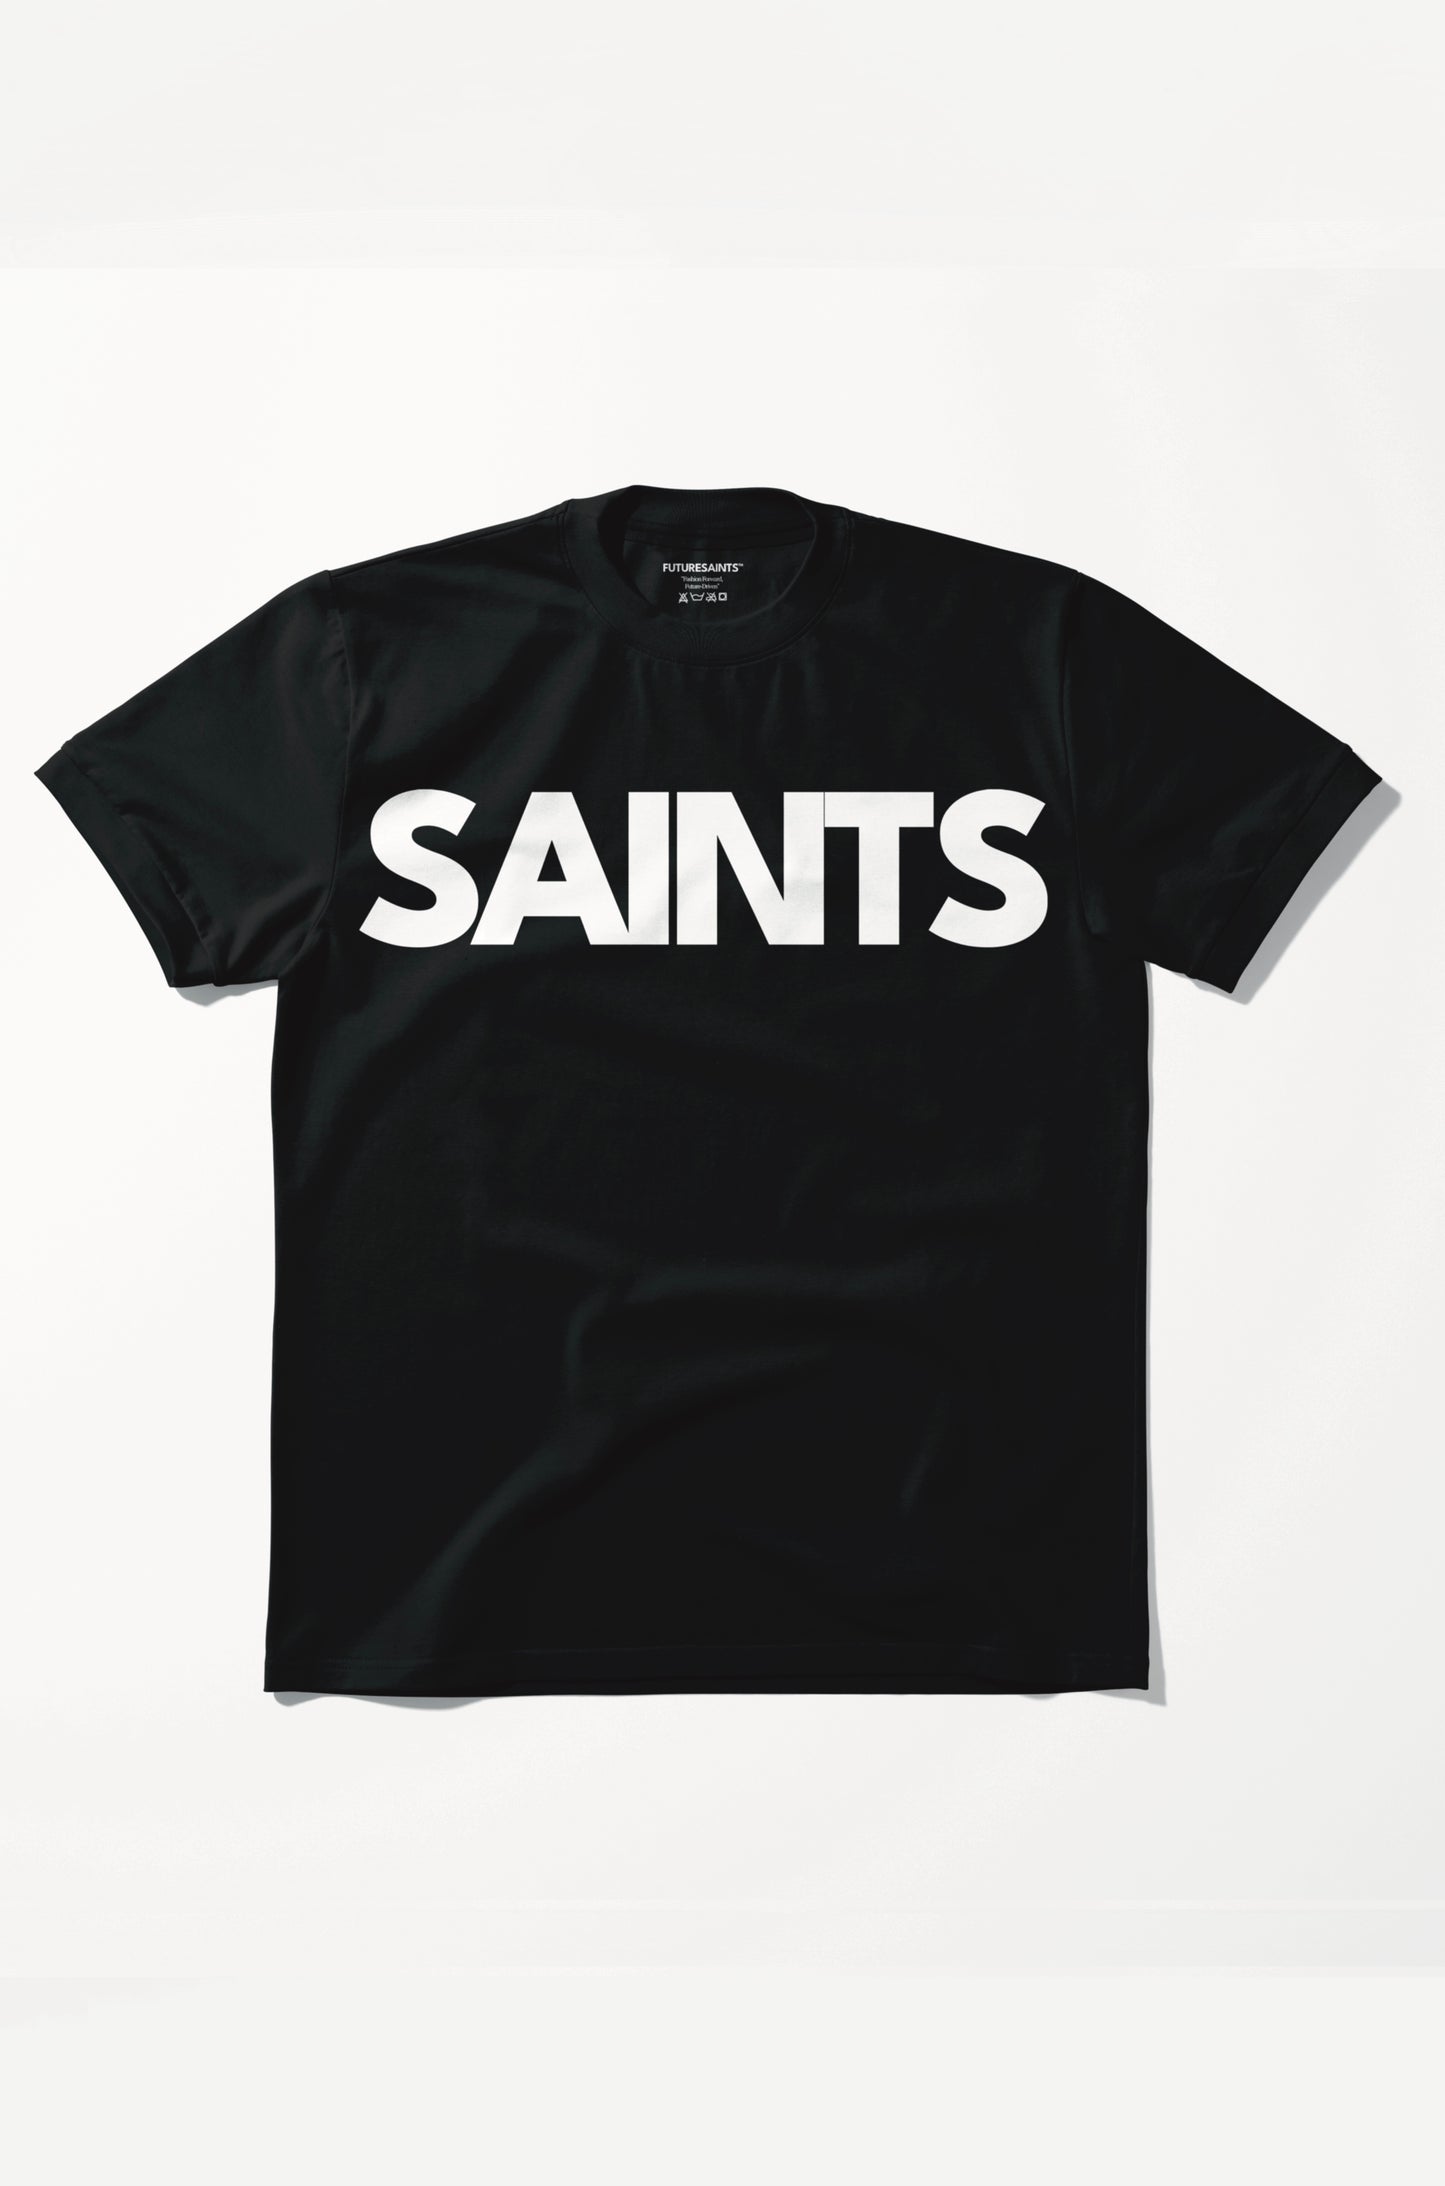 Saints signature tshirt